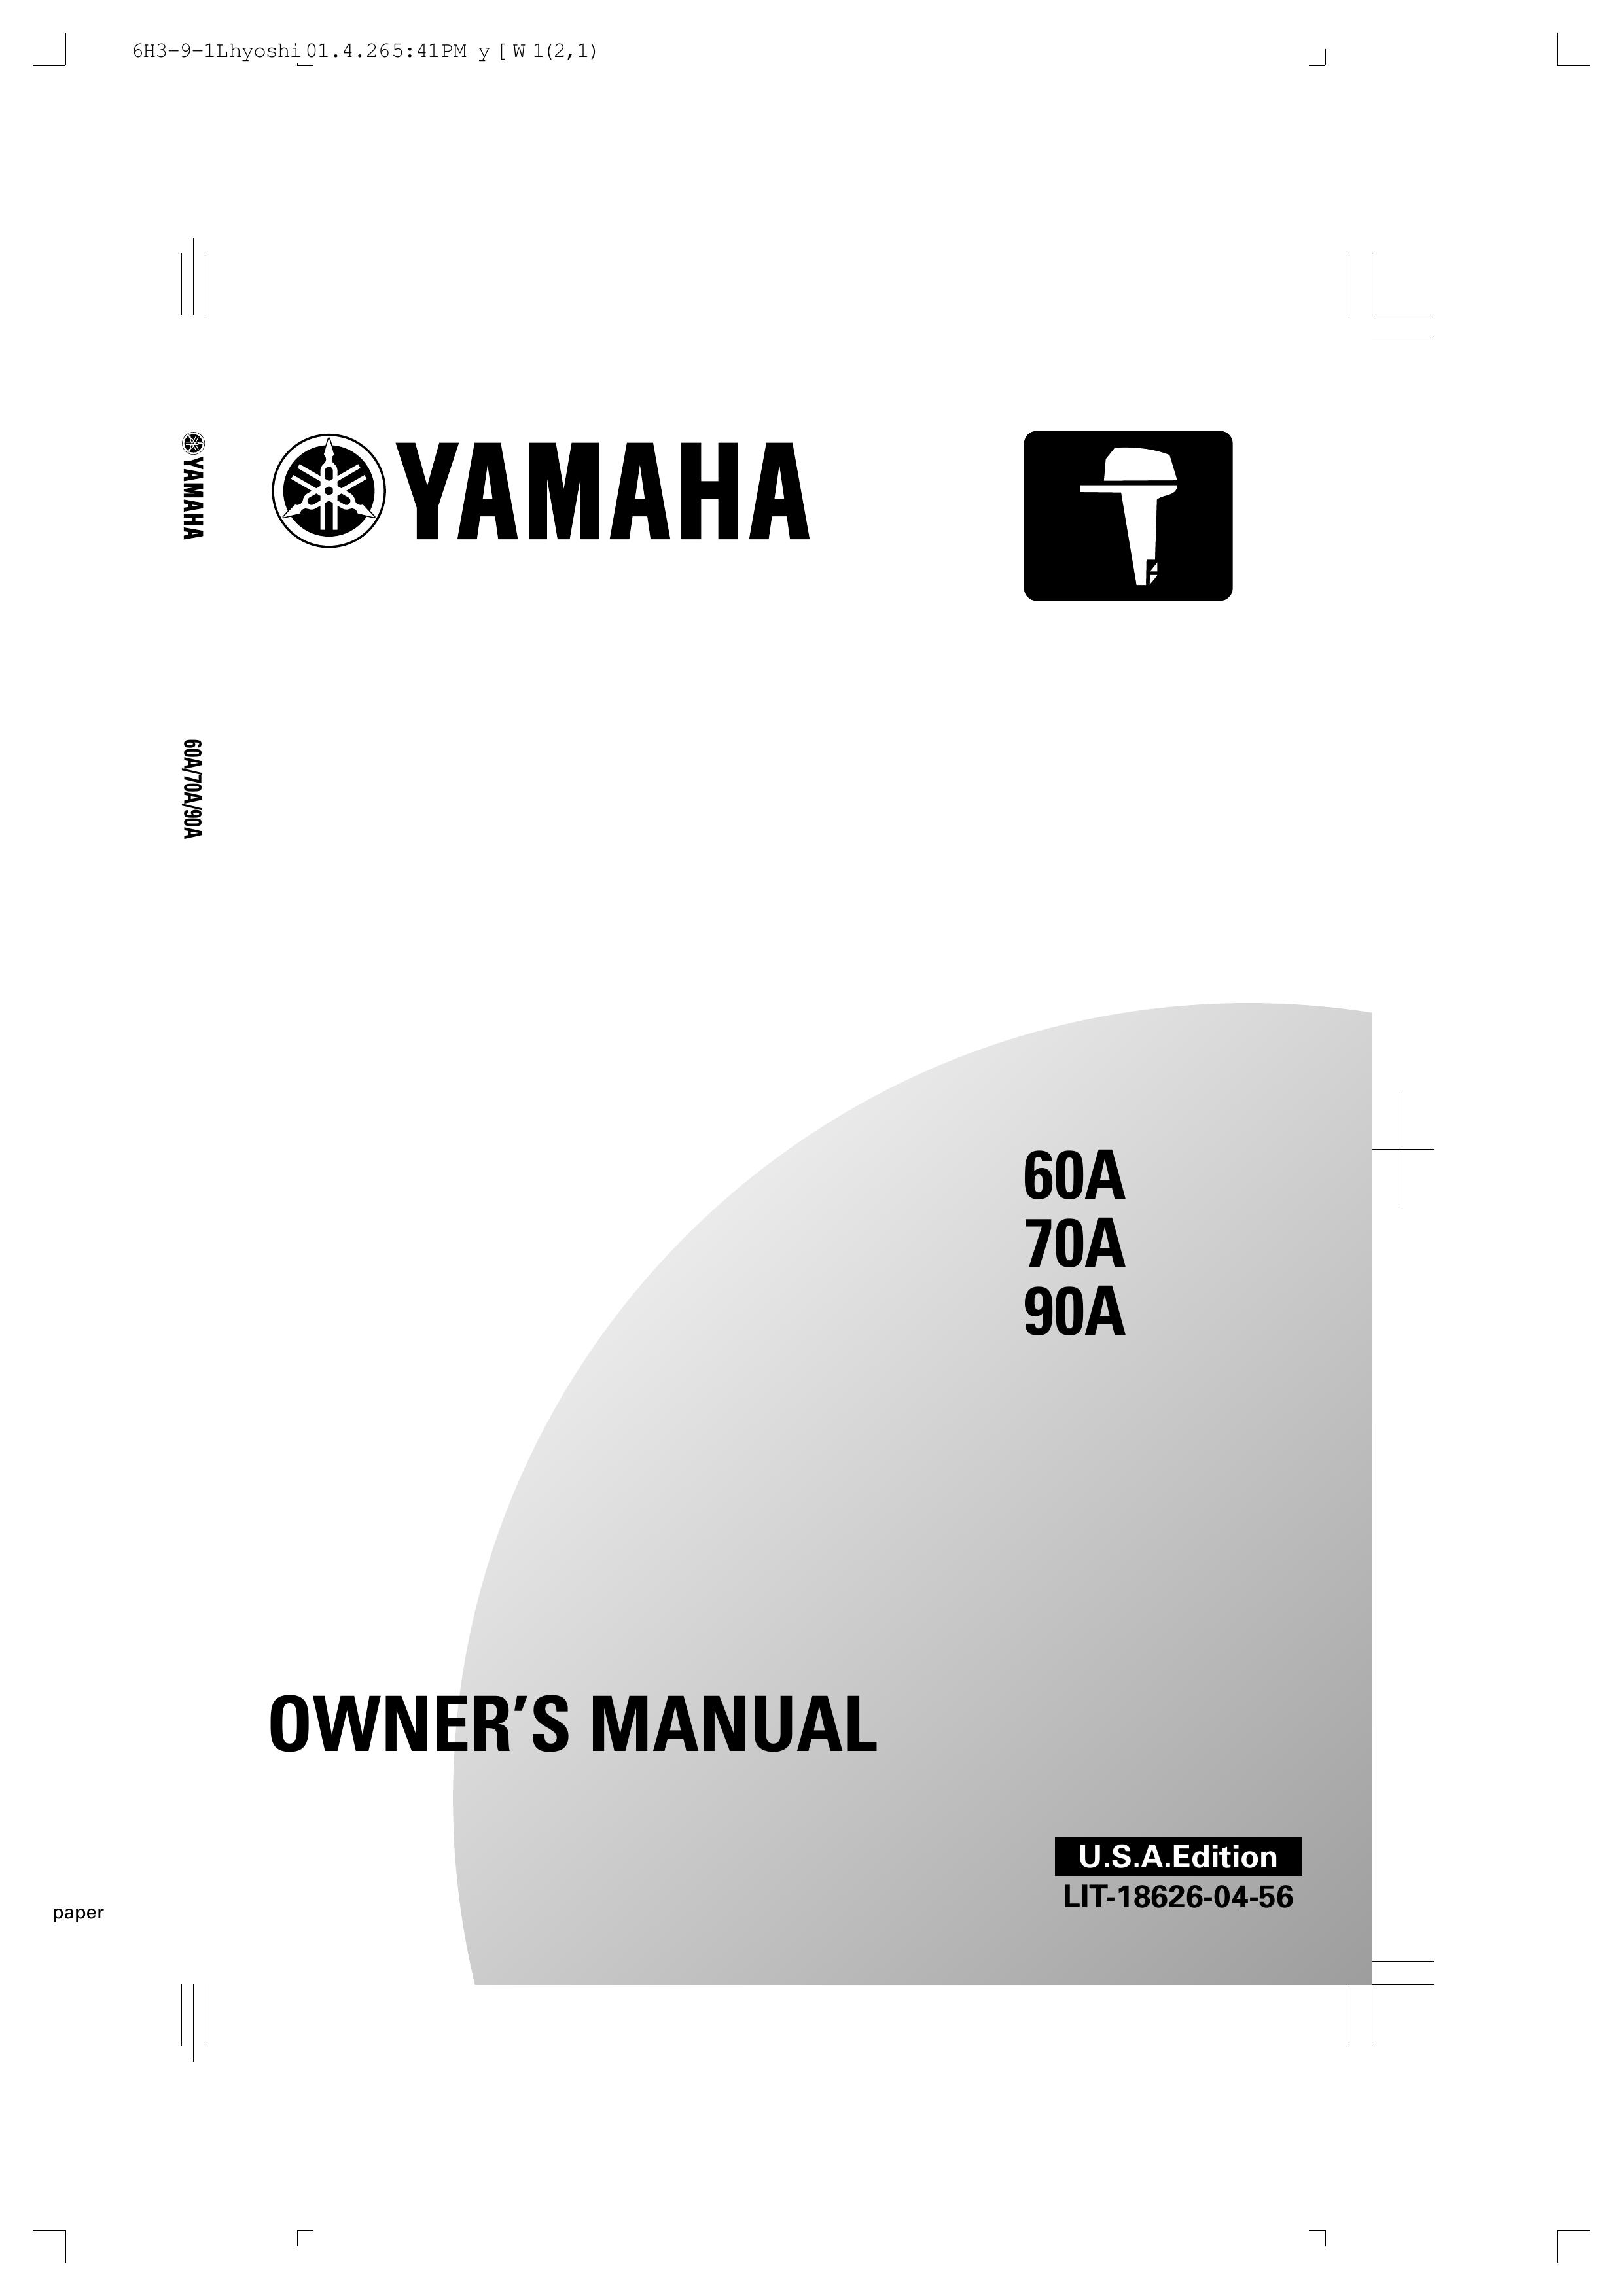 Yamaha 90A Outboard Motor User Manual